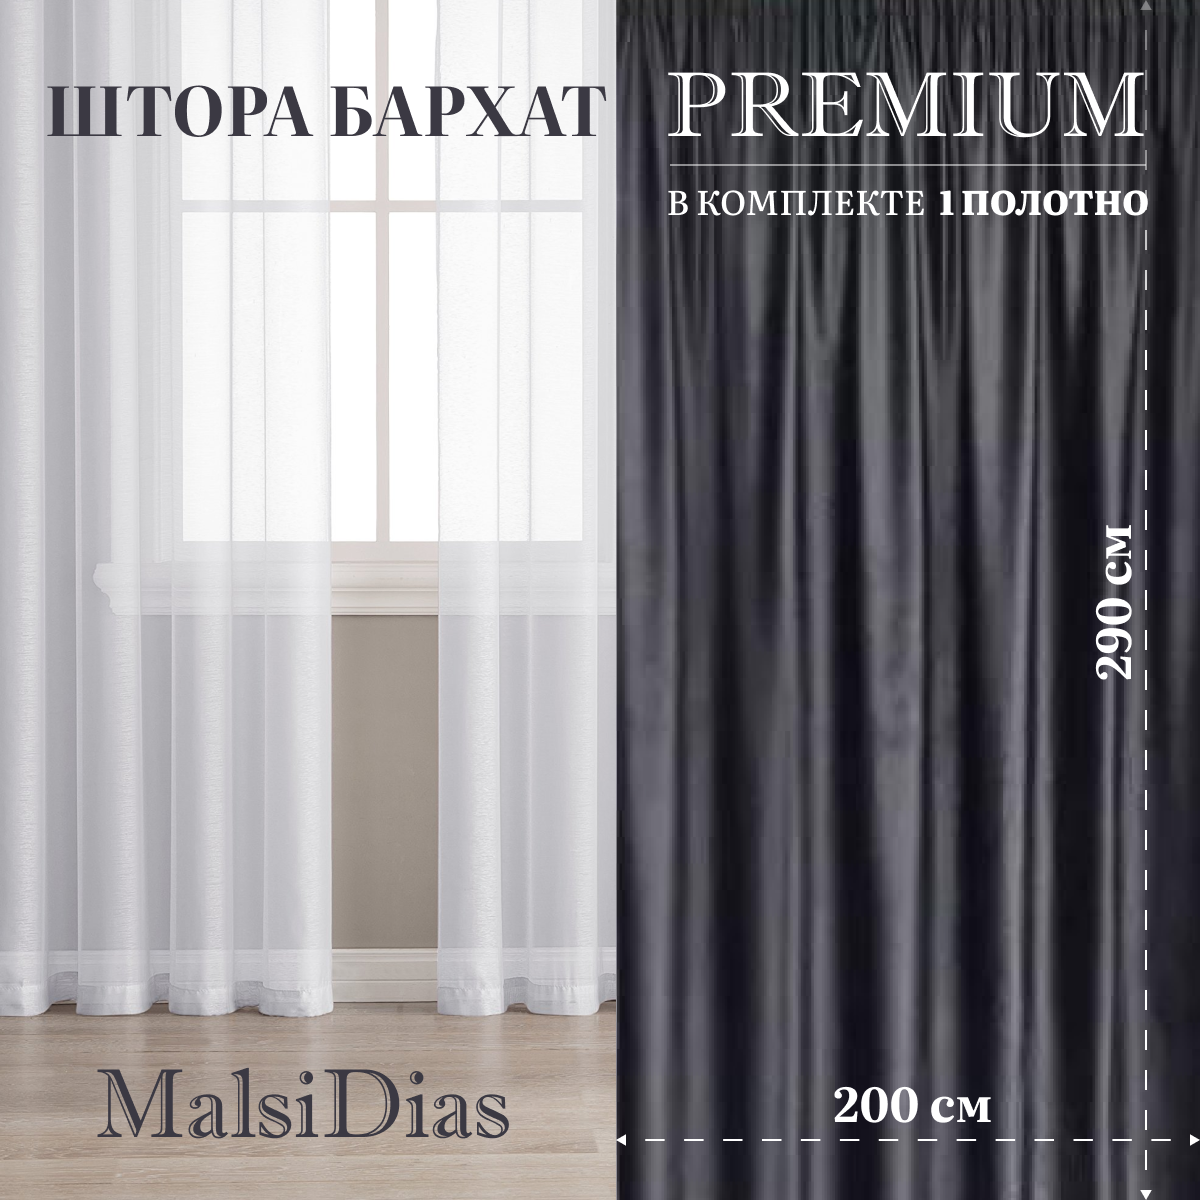 Штора бархат блэкаут MalsiDias 290х200, темно-серый. Портьера на шторной ленте. Шторы для комнаты, гостиной, кухни.